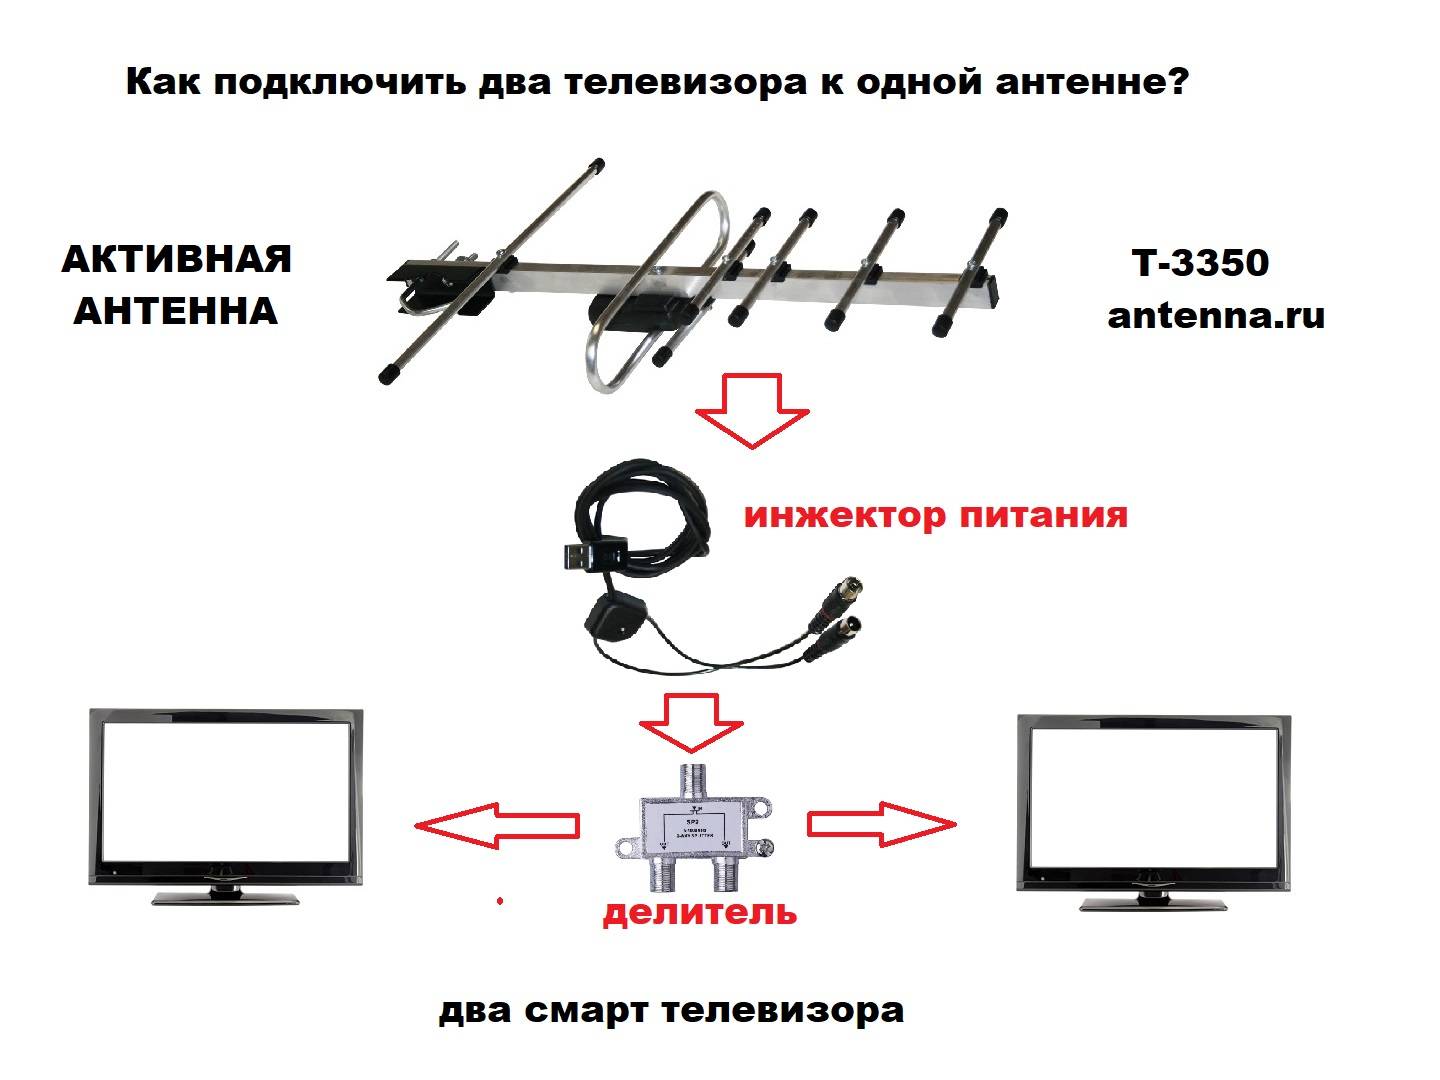 Триколор тв на 2 телевизора: схема подключения и порядок использования